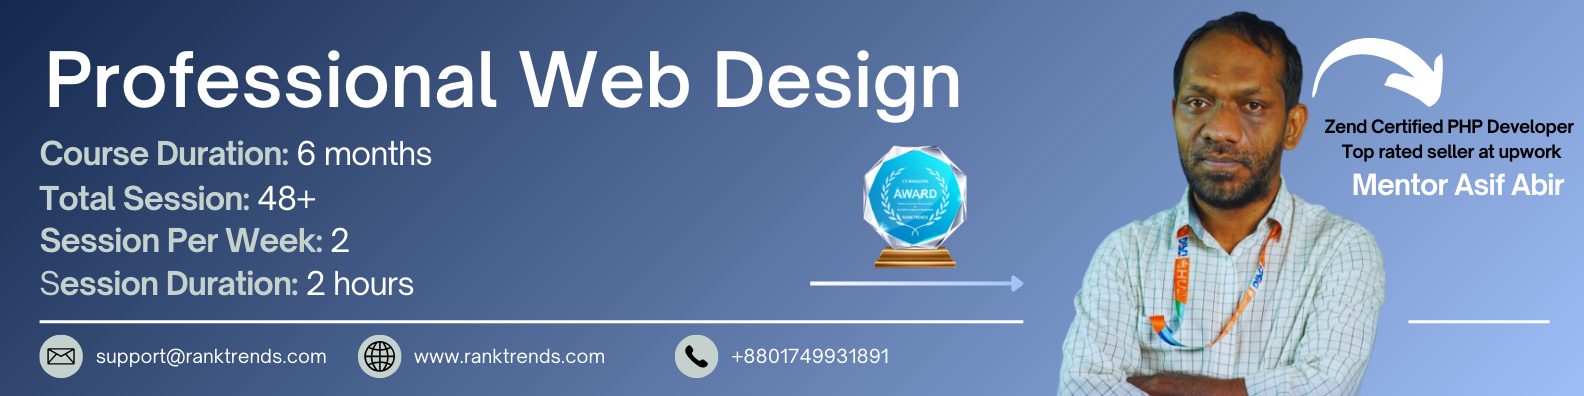 professional web design course in banlgadesh at rank trends